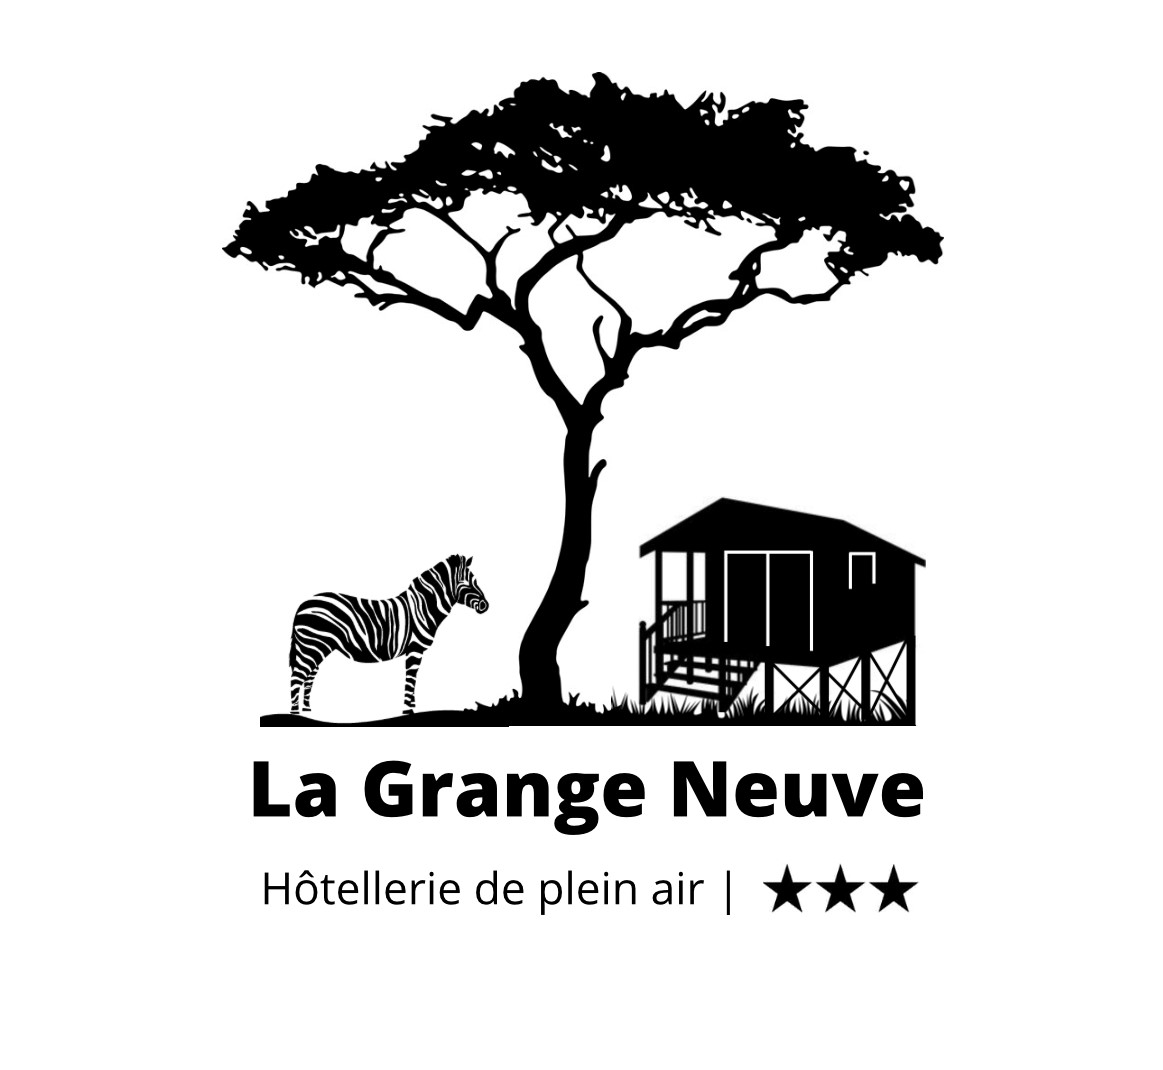 Establishment Camping La Grange Neuve - Sigean